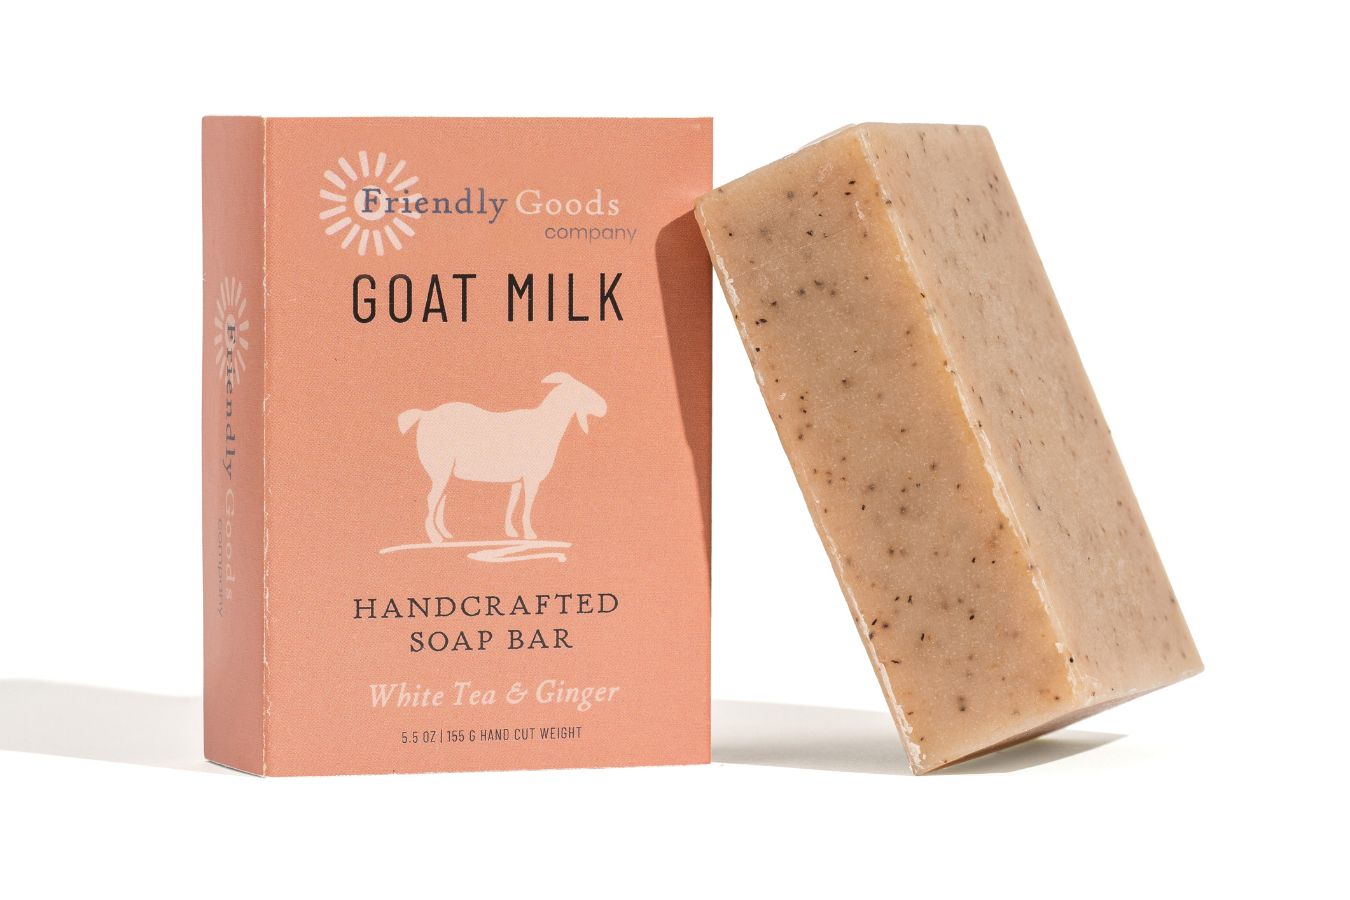 Friendly-Goods-Company-White-Tea-Ginger-Goat-Milk-Soap